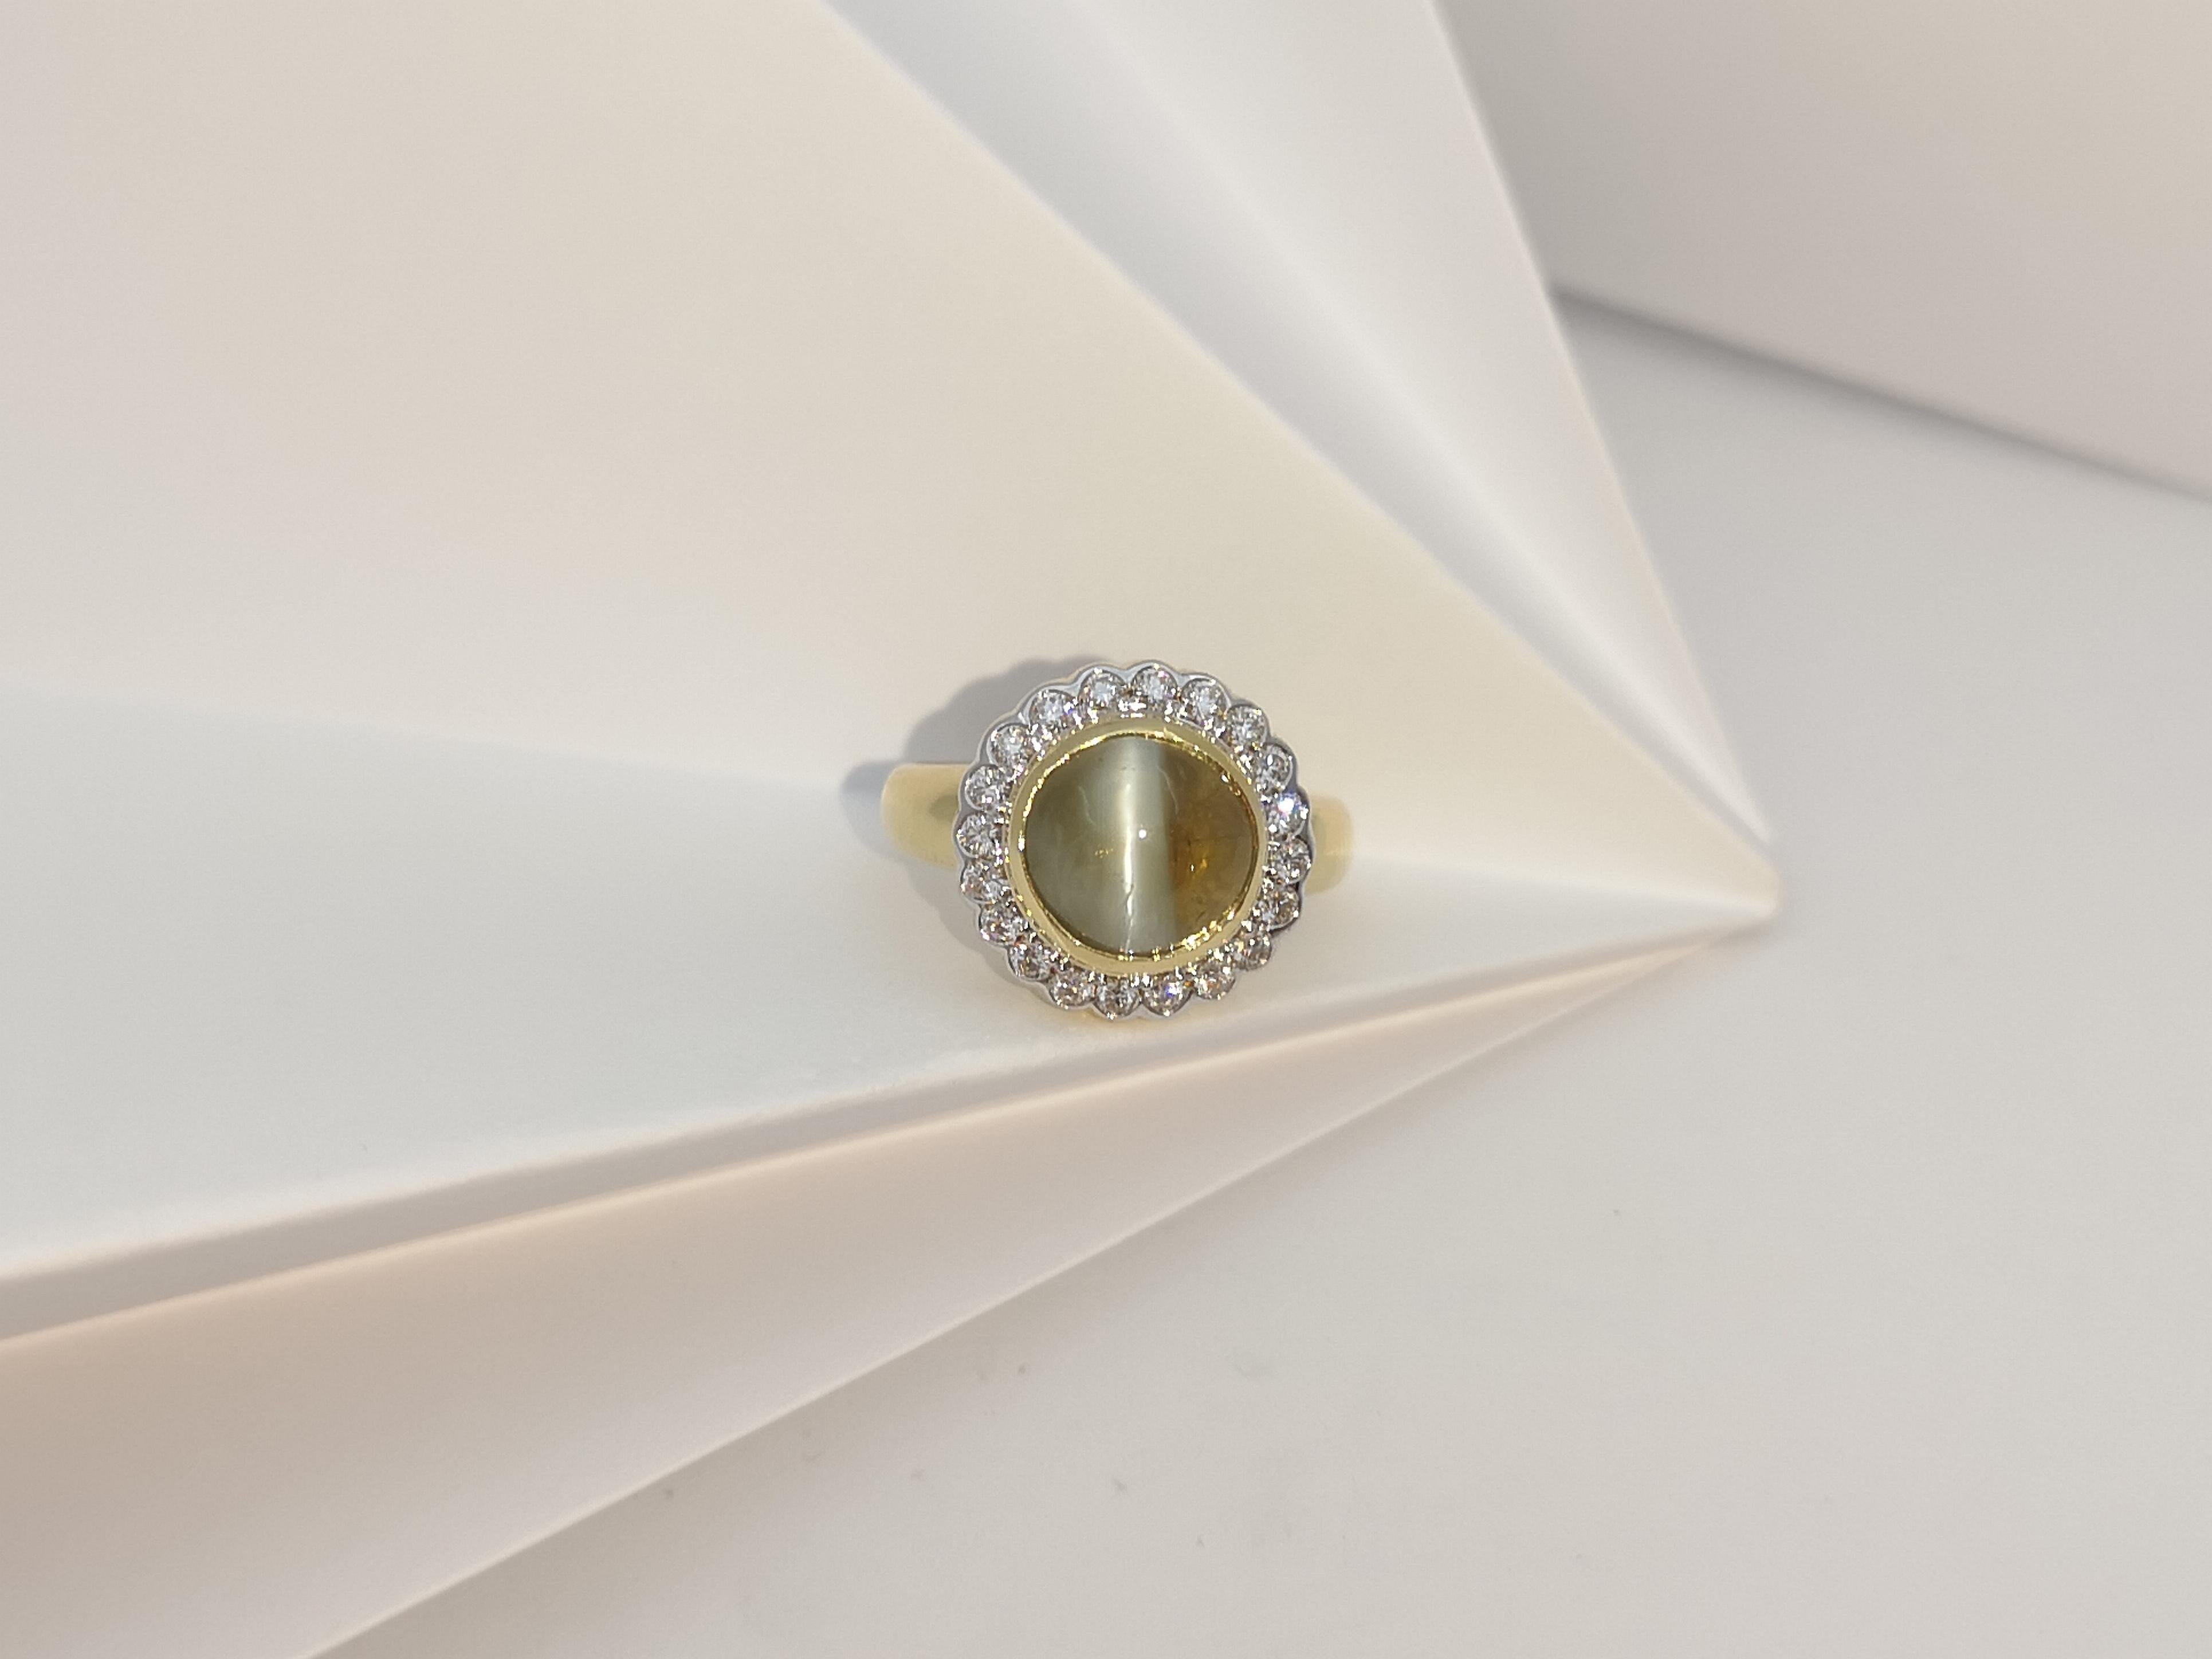 Chrysoberyl Cat's Eye with Diamond Ring Set in 18 Karat Gold For Sale 2